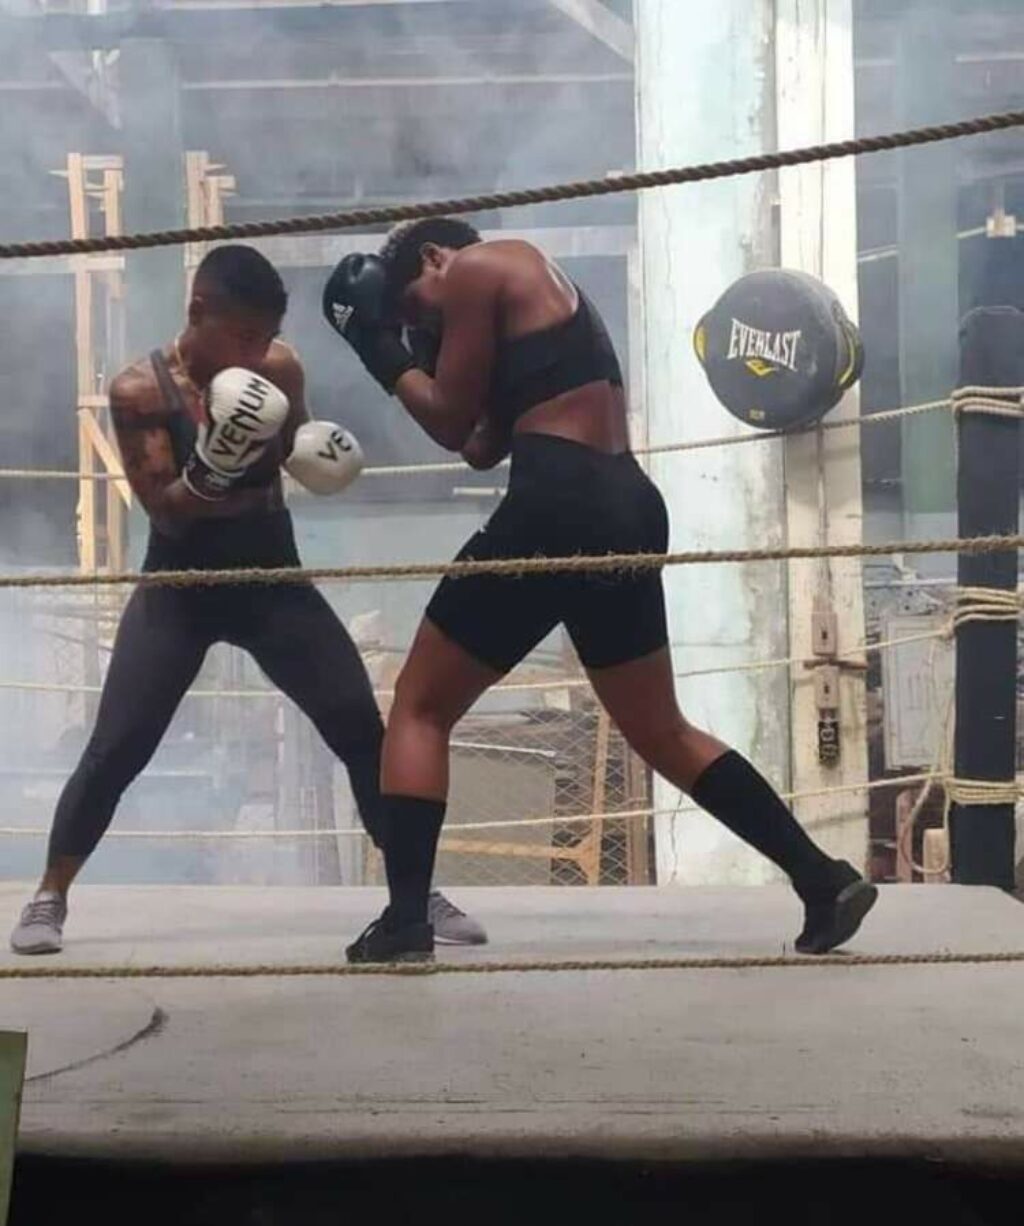 La boxeadora cubana Namibia Flores peleando en el ring.